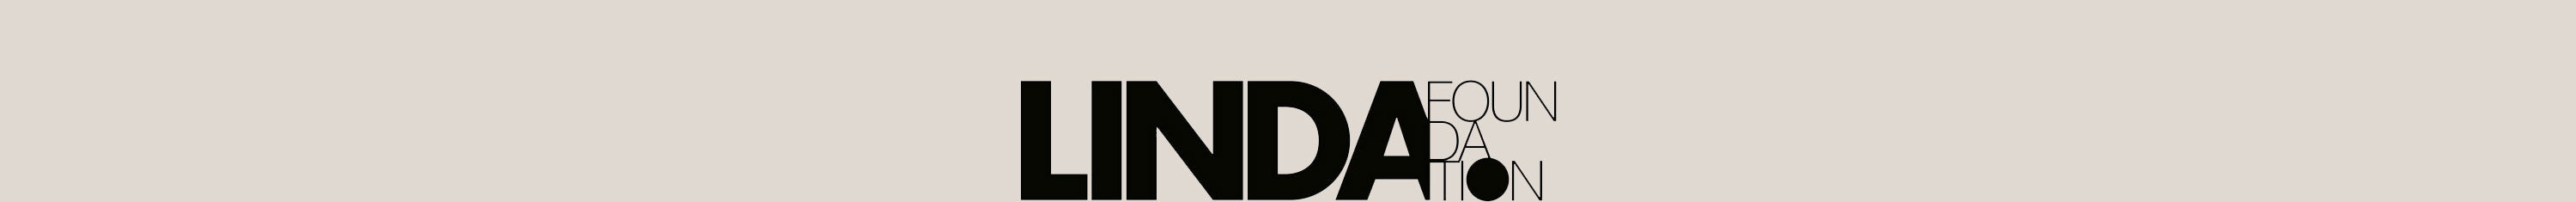 LINDA.foundation logo desktop